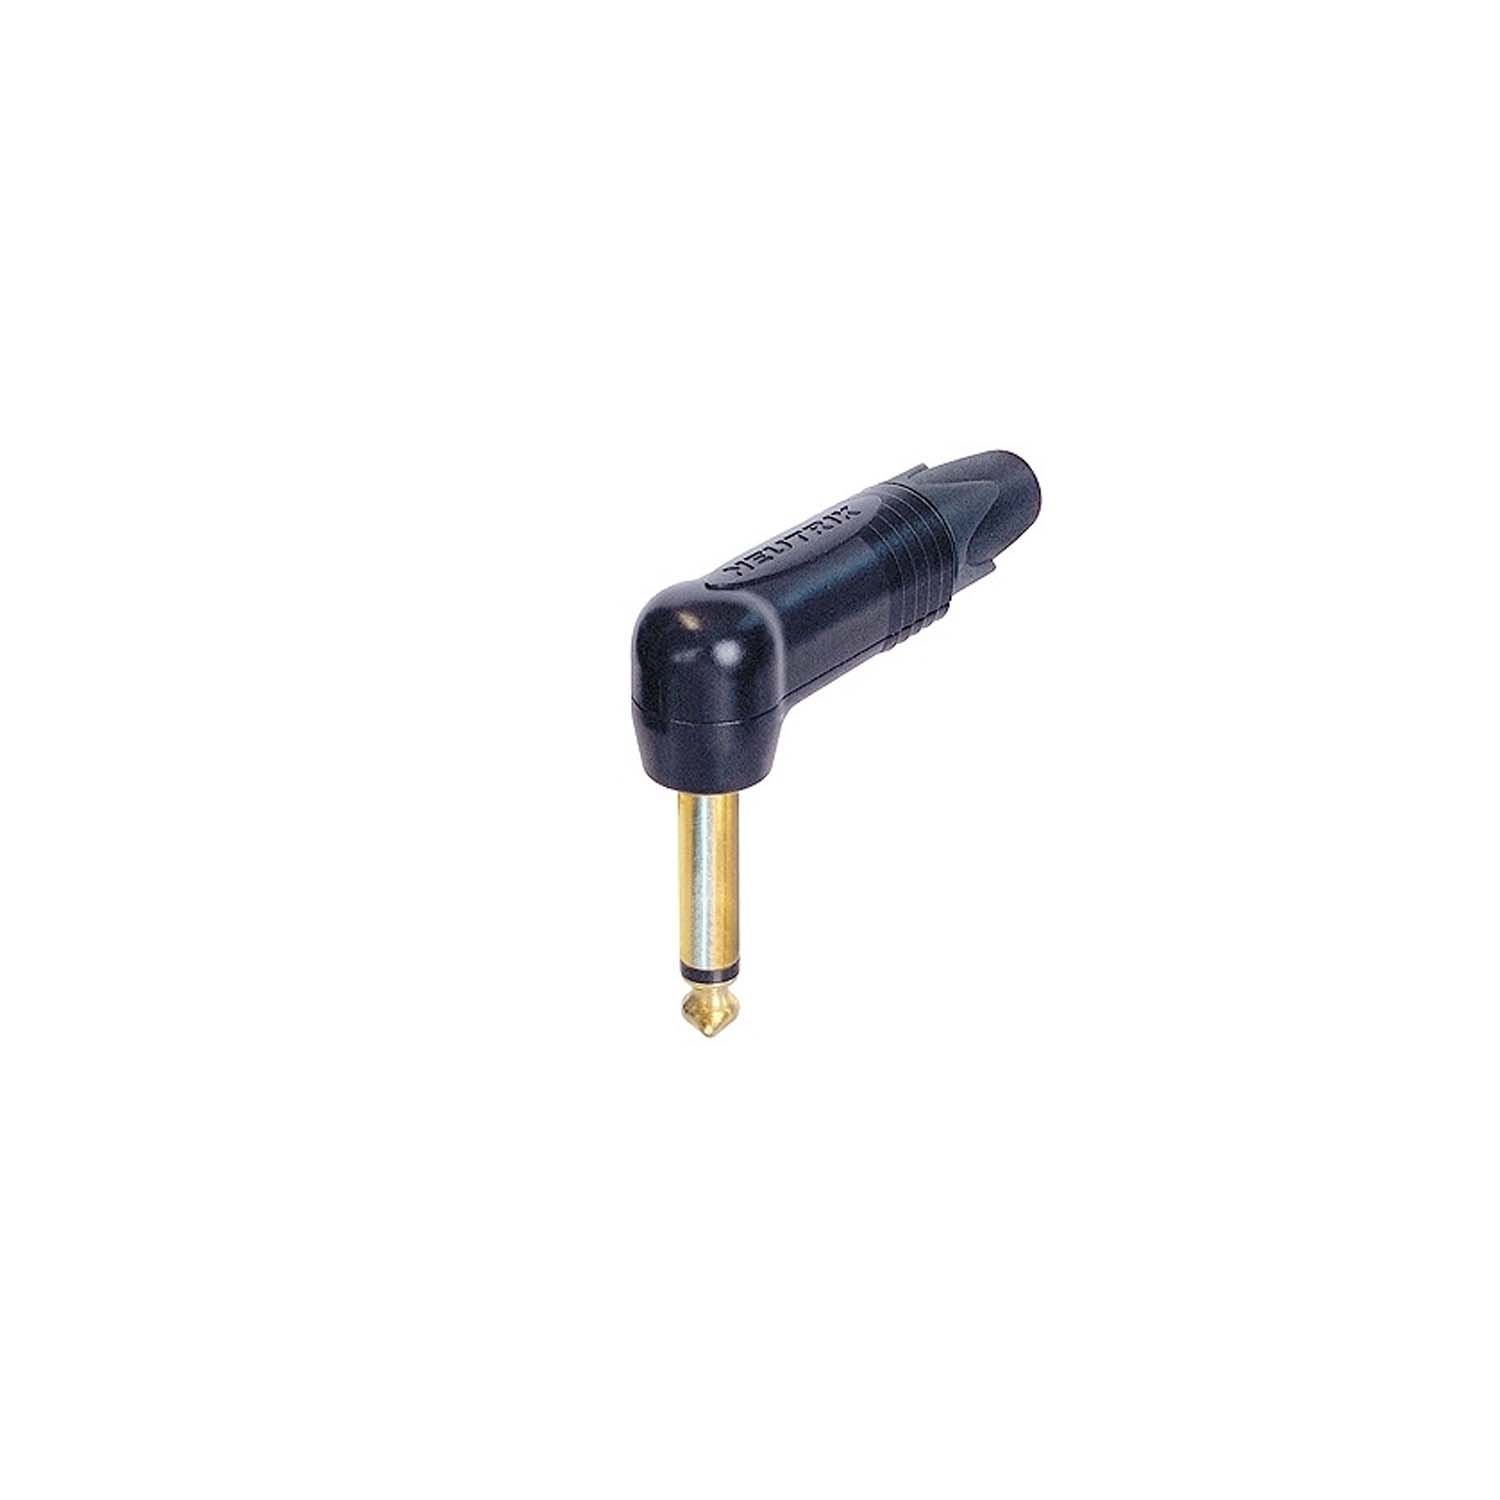 Neutrik 90 degree 14 inch TS Male Slim Plug Black with Gold Pins